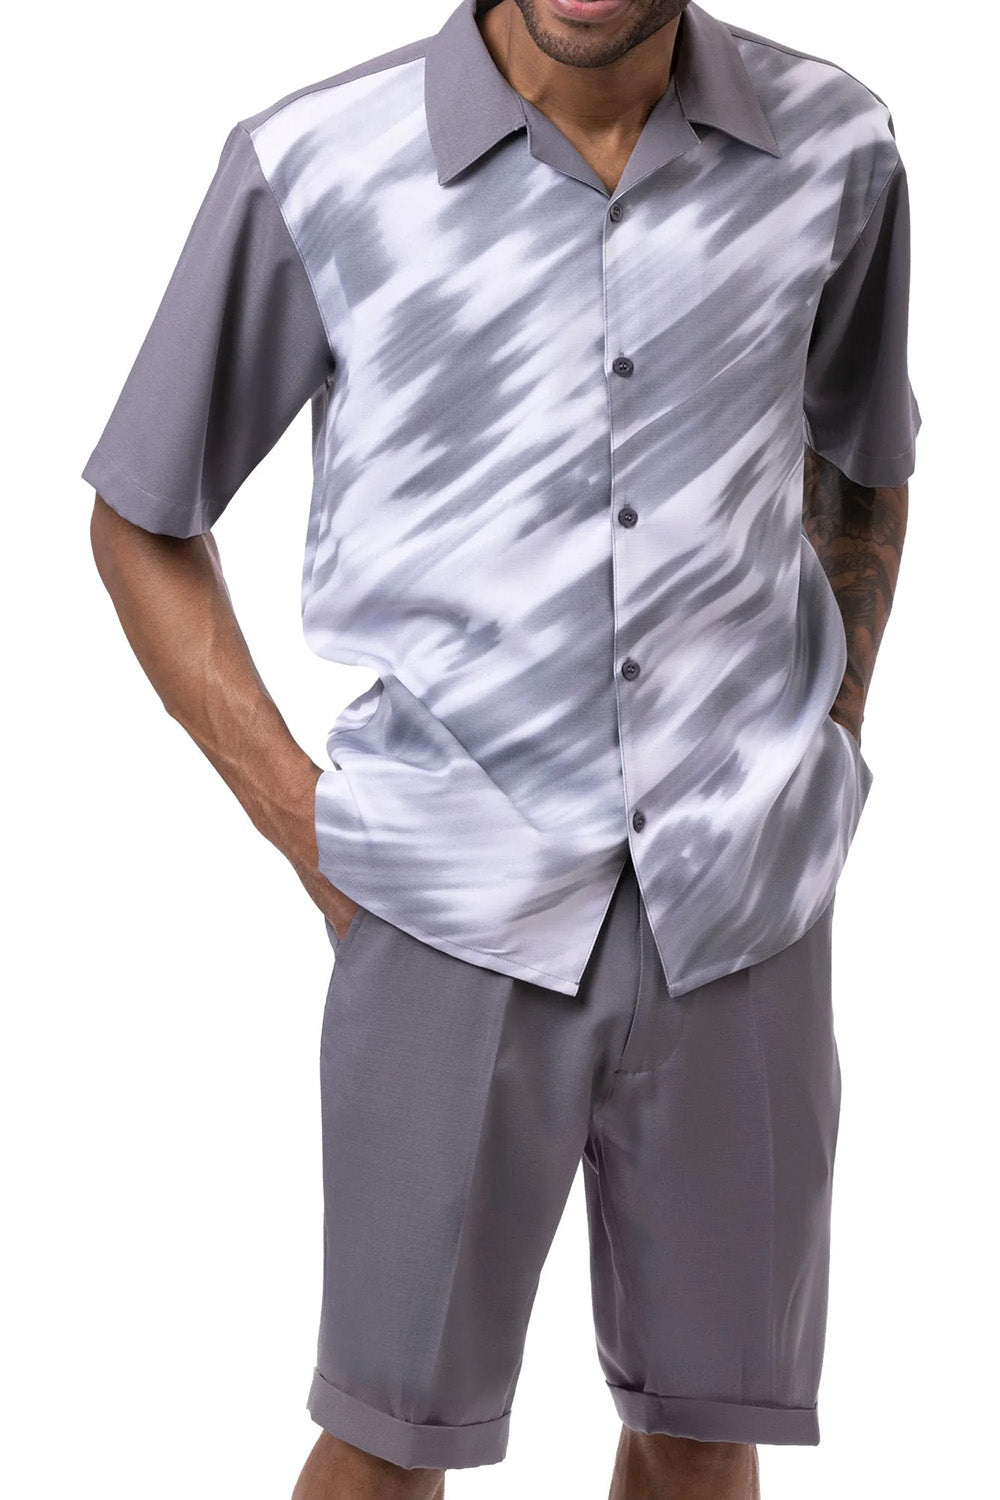 Gray Print Design Walking Suit 2 Piece Set Short Sleeve Shirt with Shorts